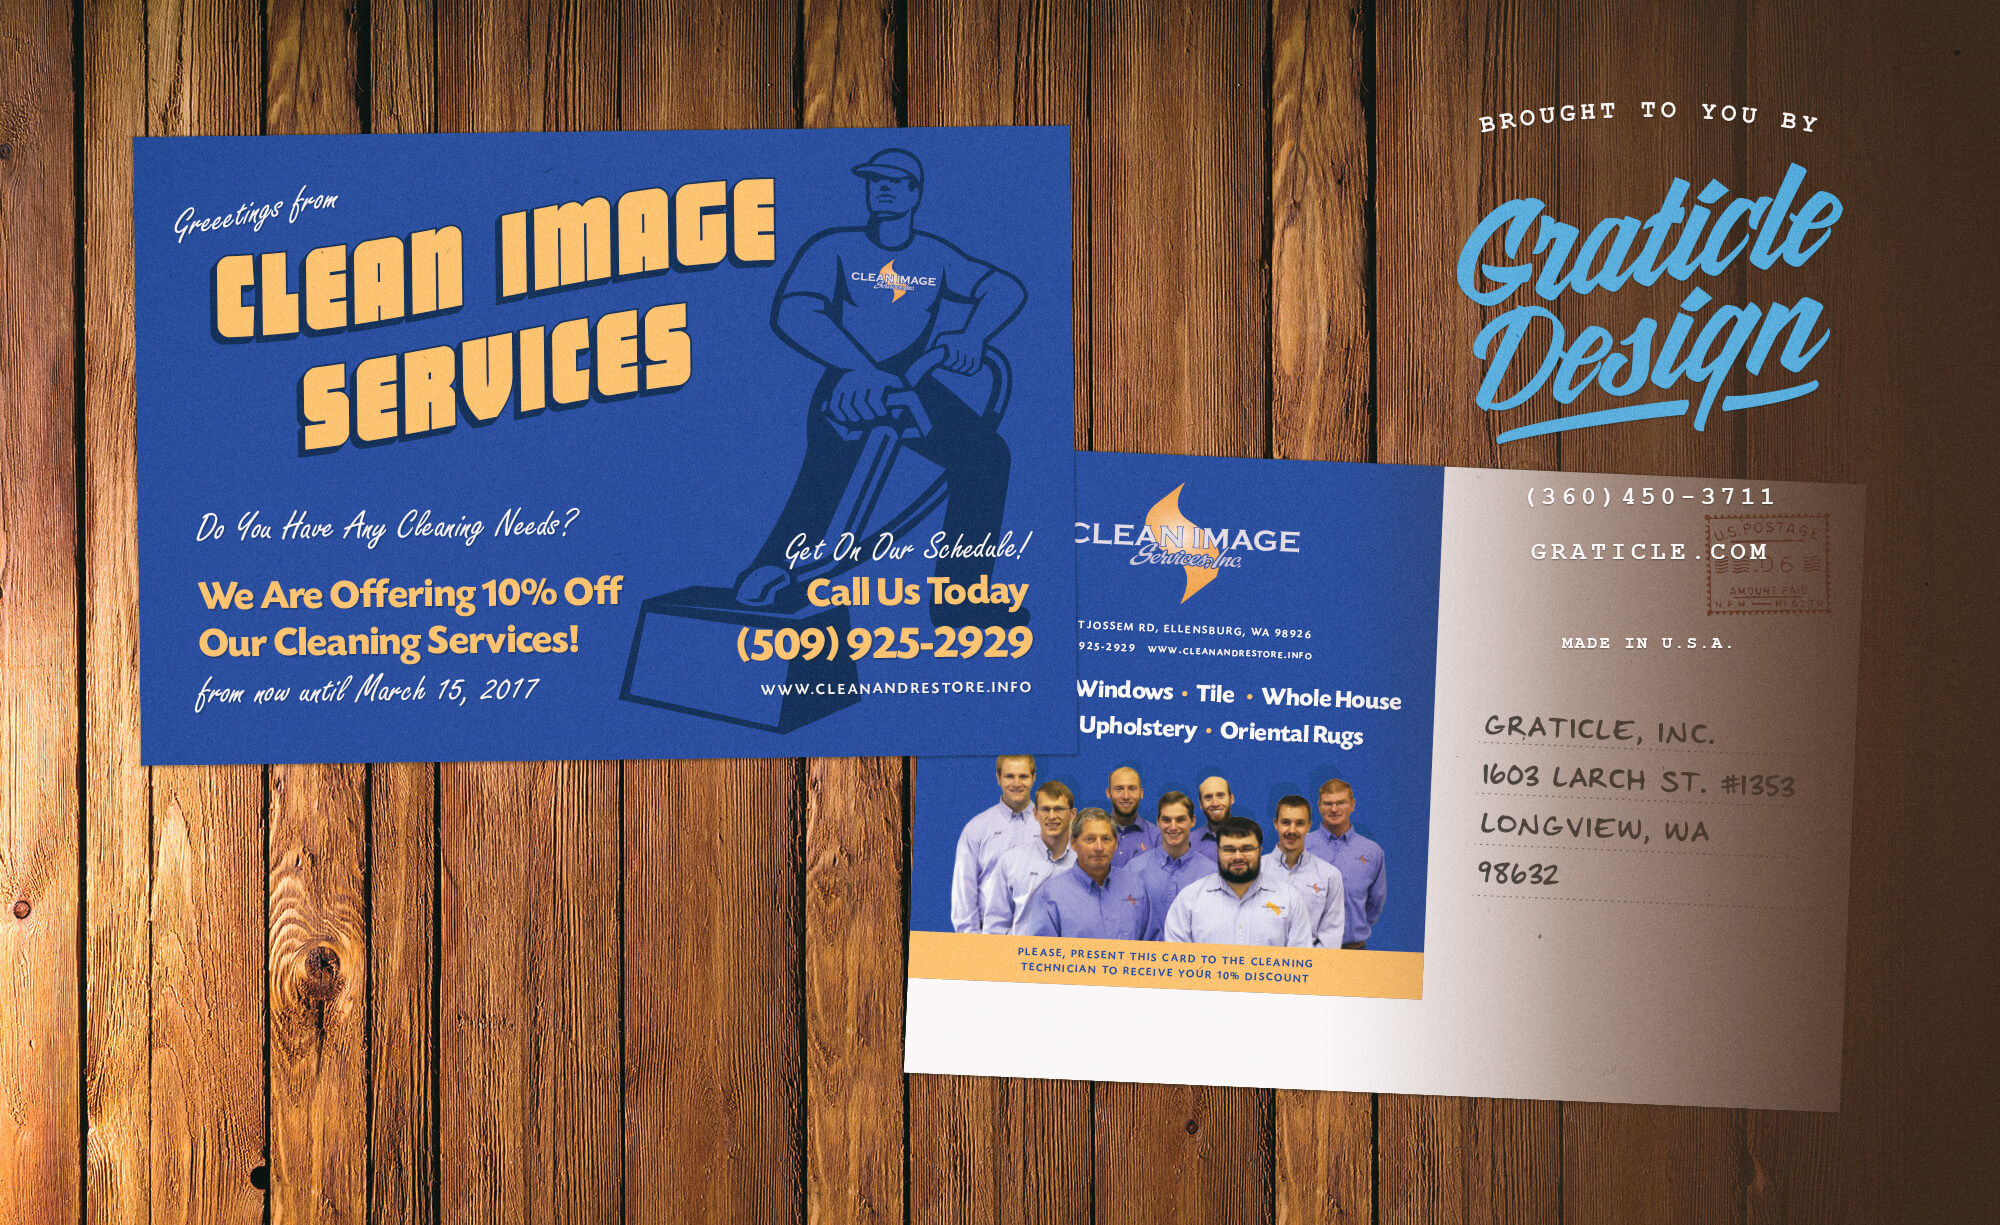 Clean Image Services, Inc.